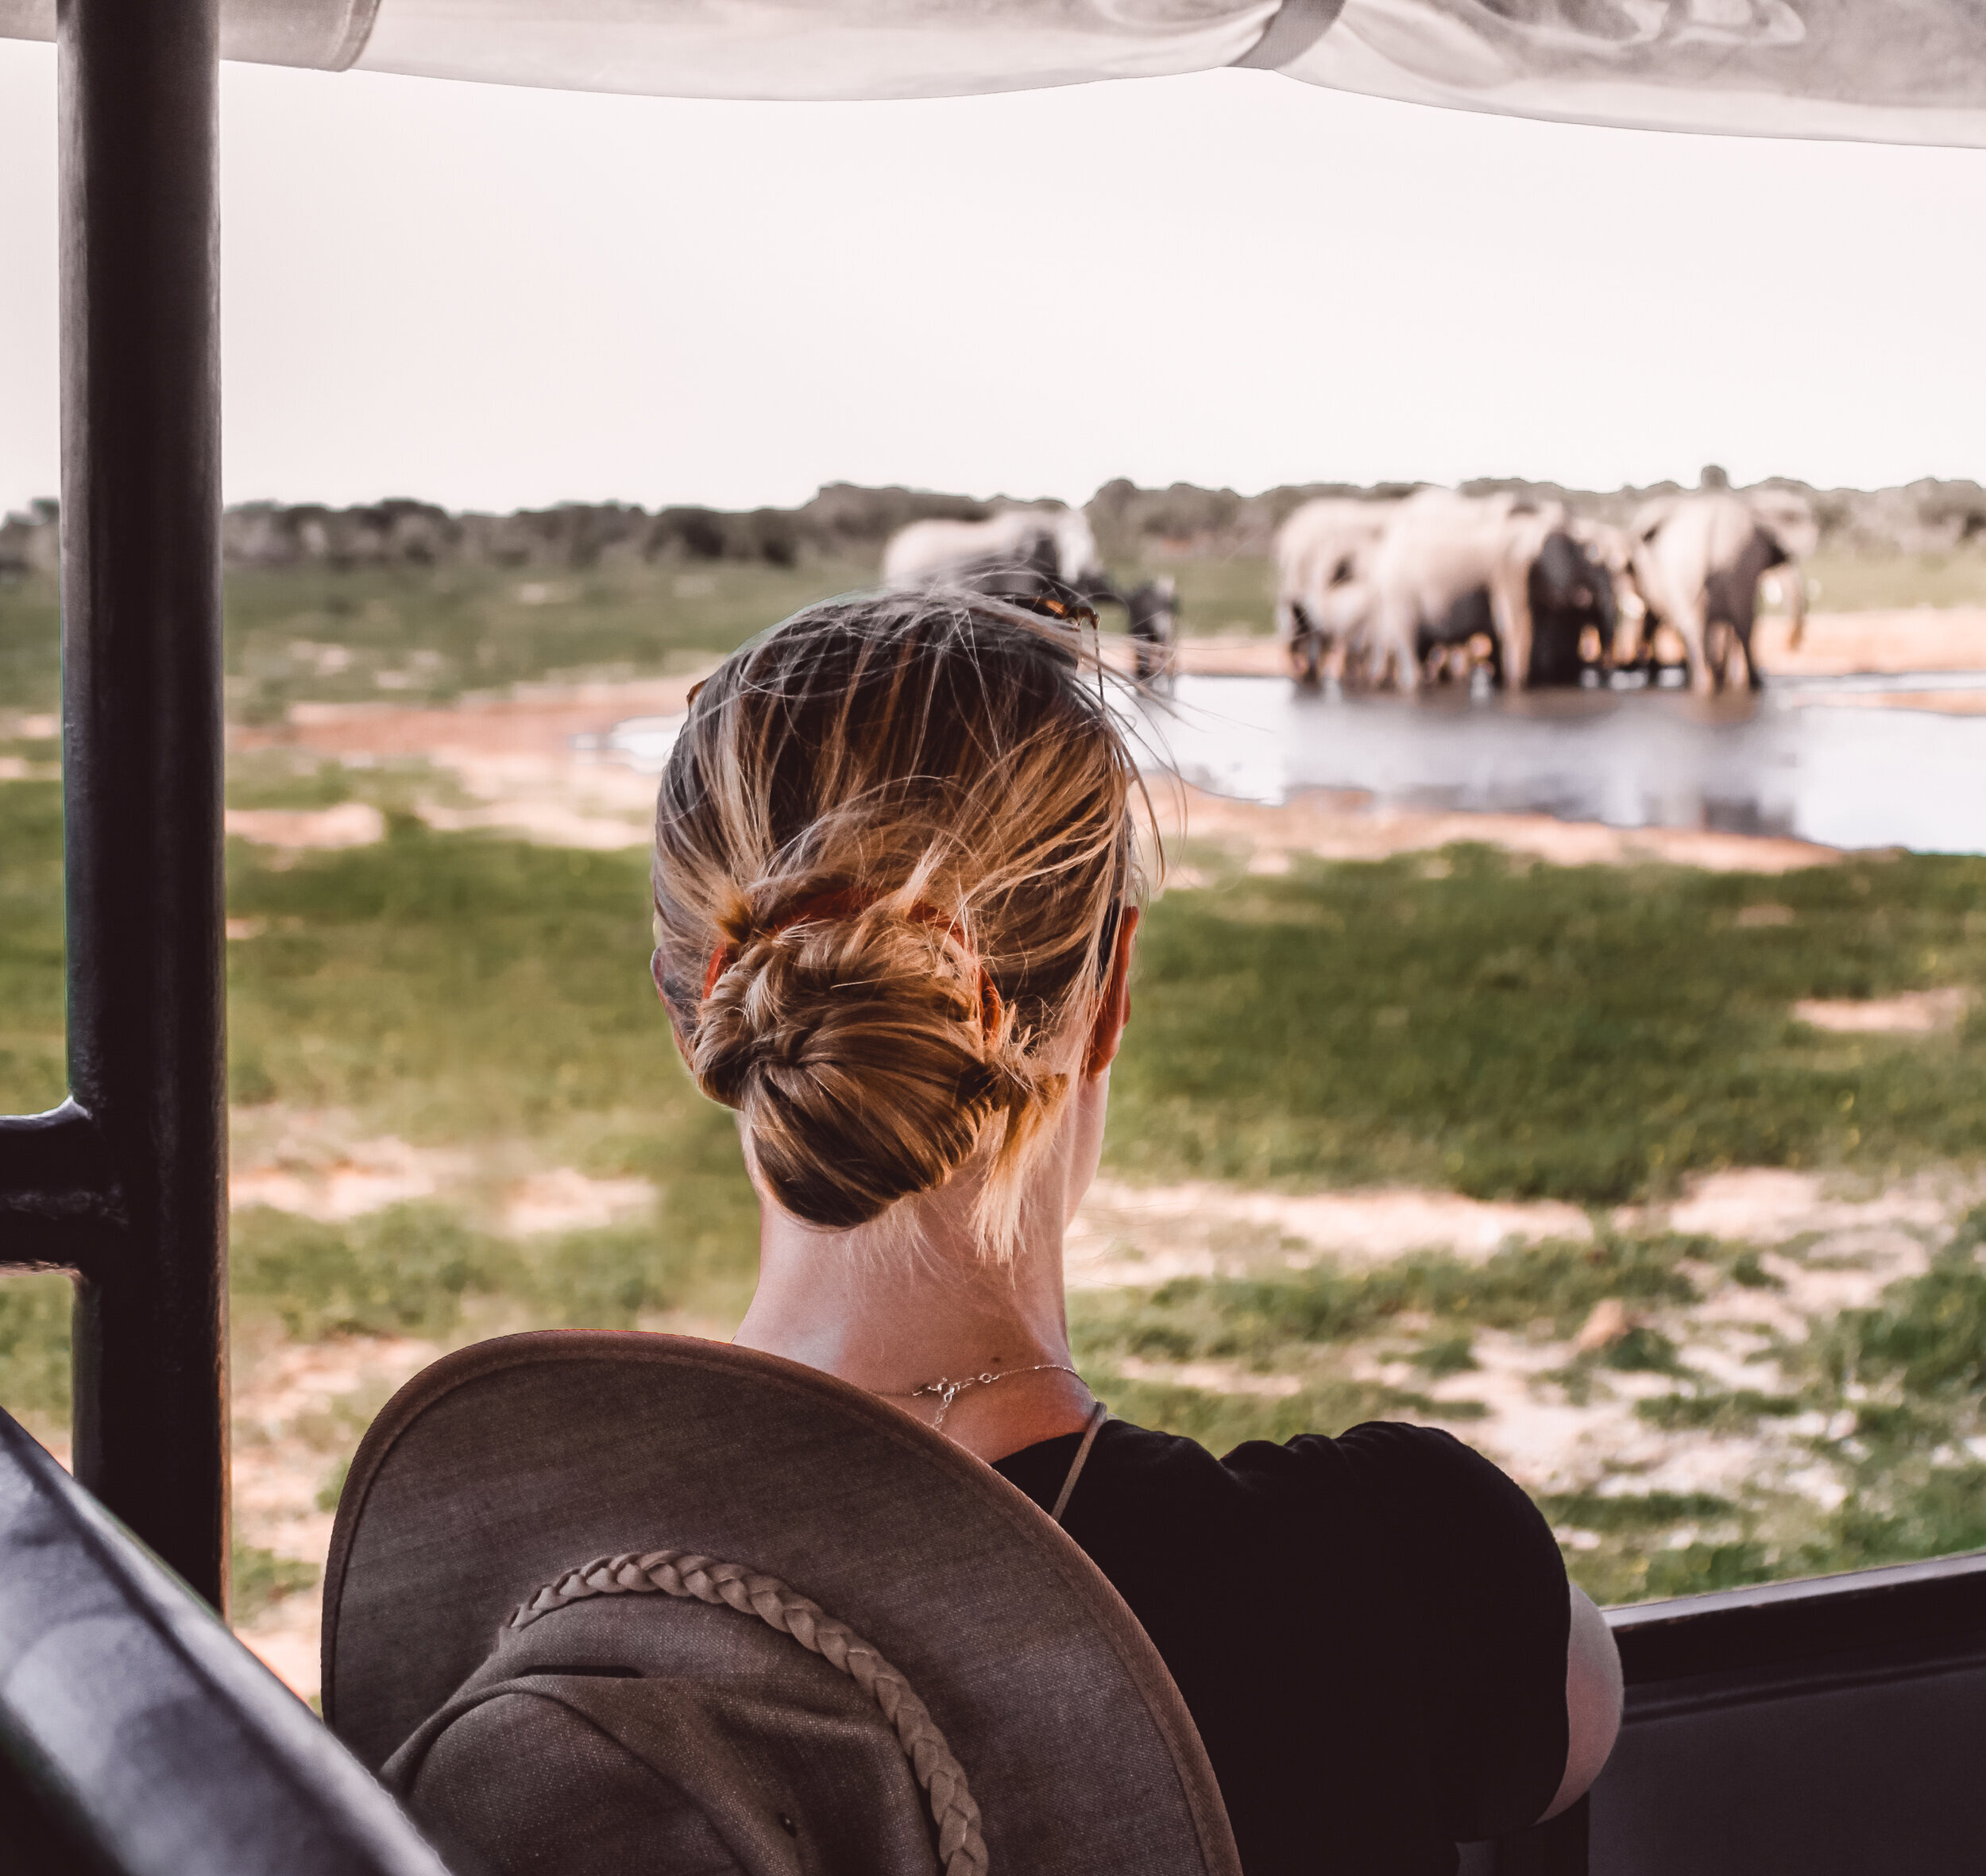 girl on safari drive looking at elephants drinking water from waterhole